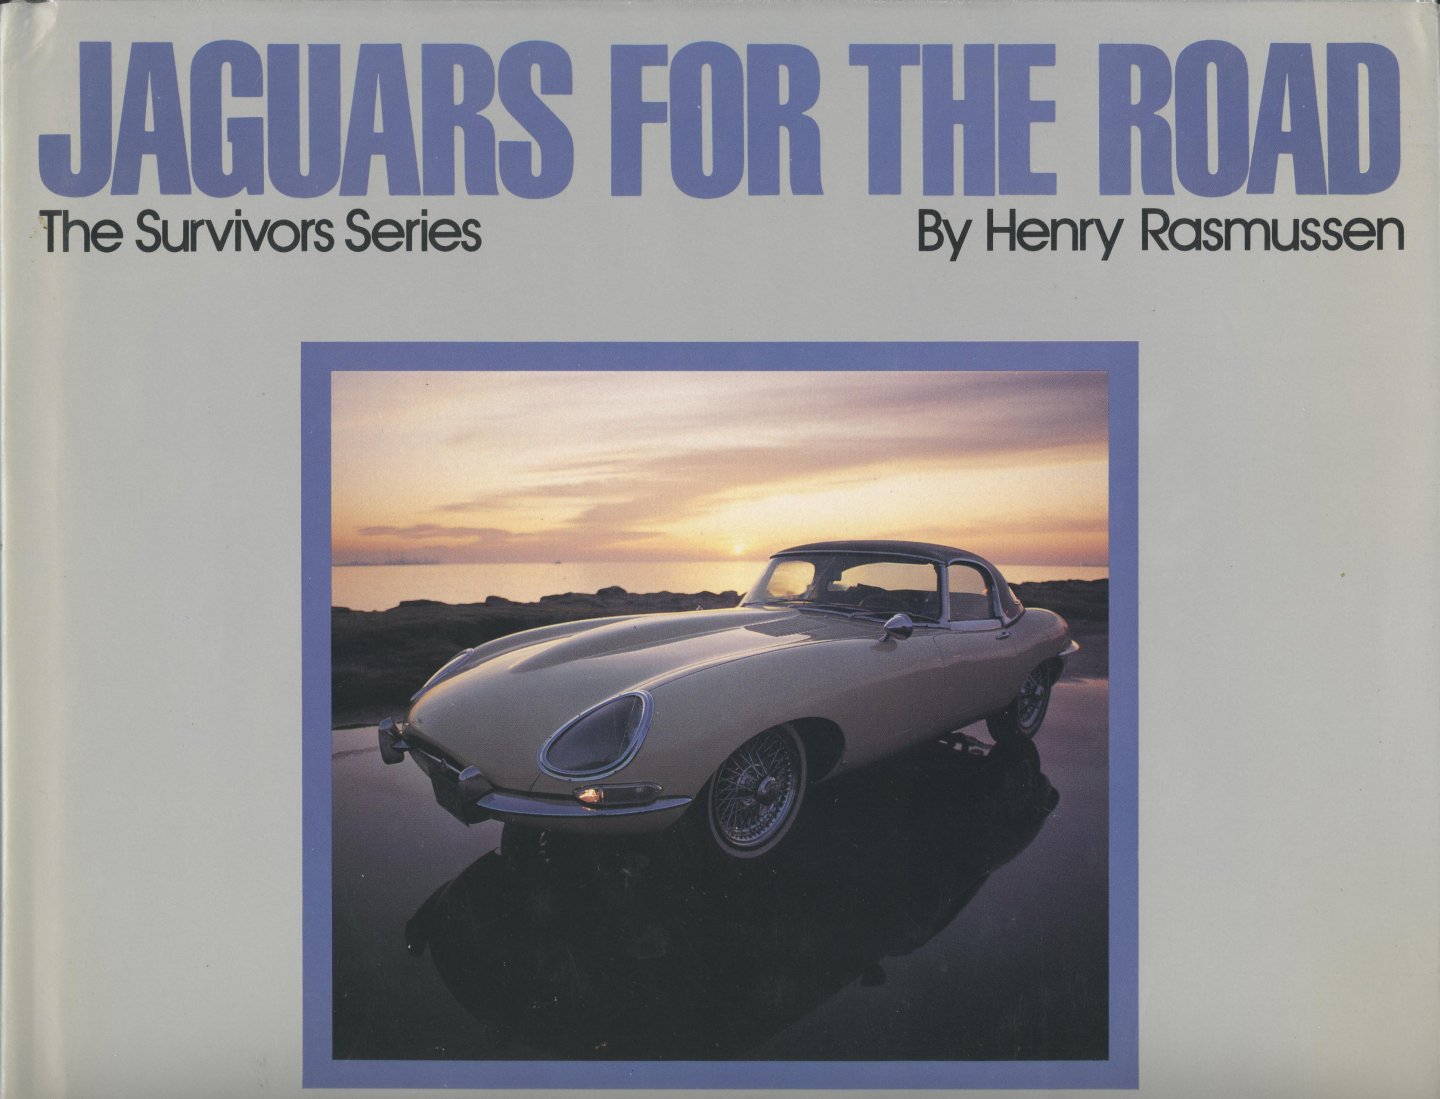 Rasmussen, Henry - Jaguars for the road